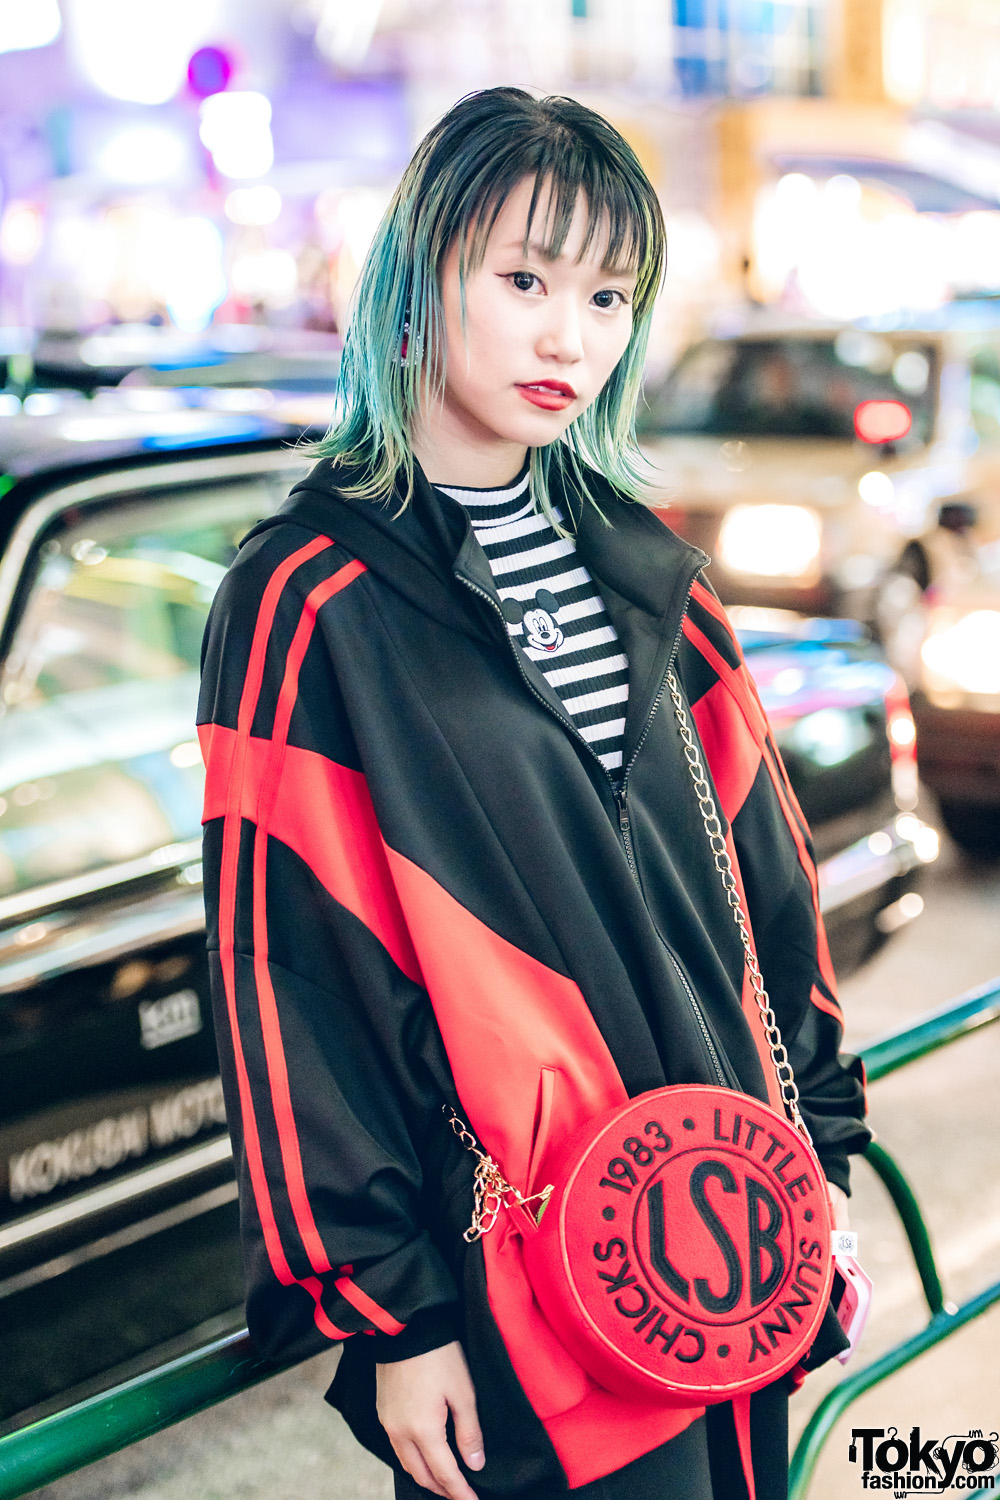 Harajuku Girls in Colorful Fun Streetwear by Jeremy Scott 